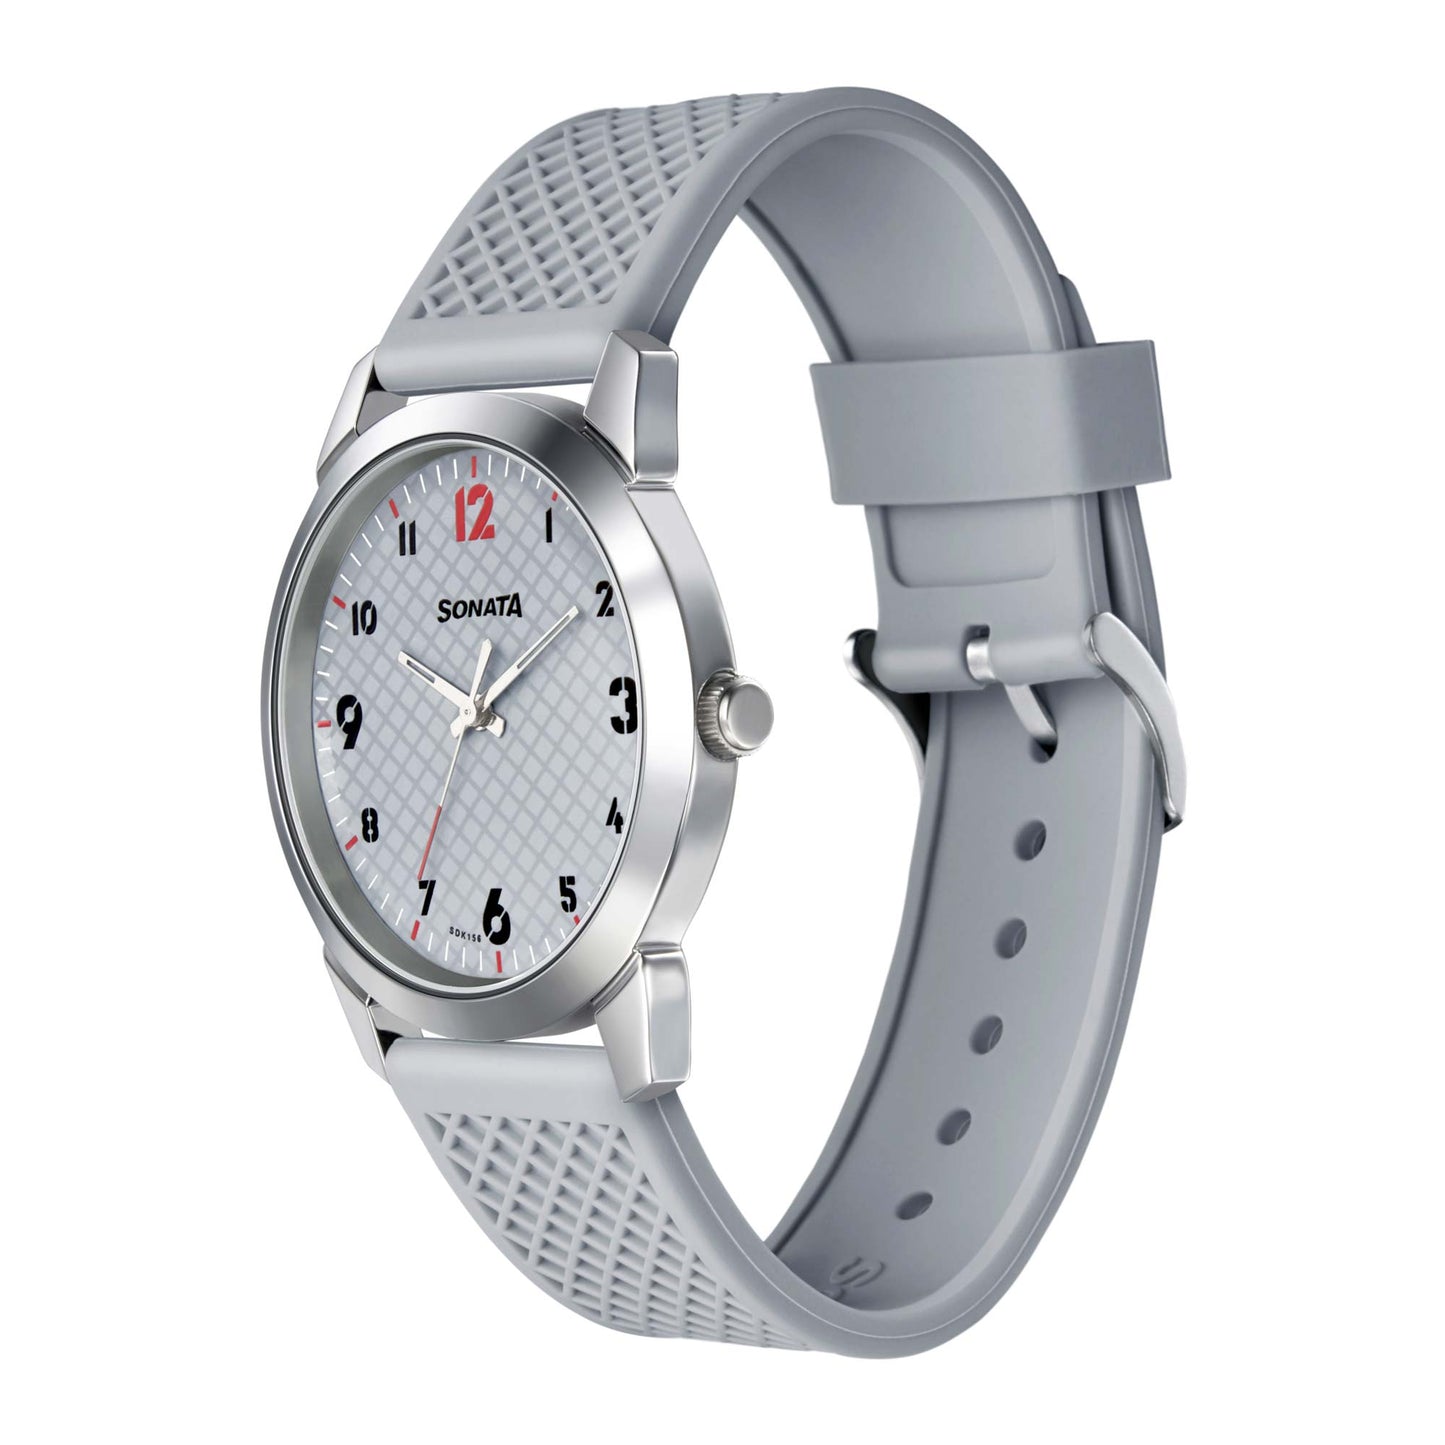 Sonata Quartz Analog Grey Dial TPU Strap Watch for Men